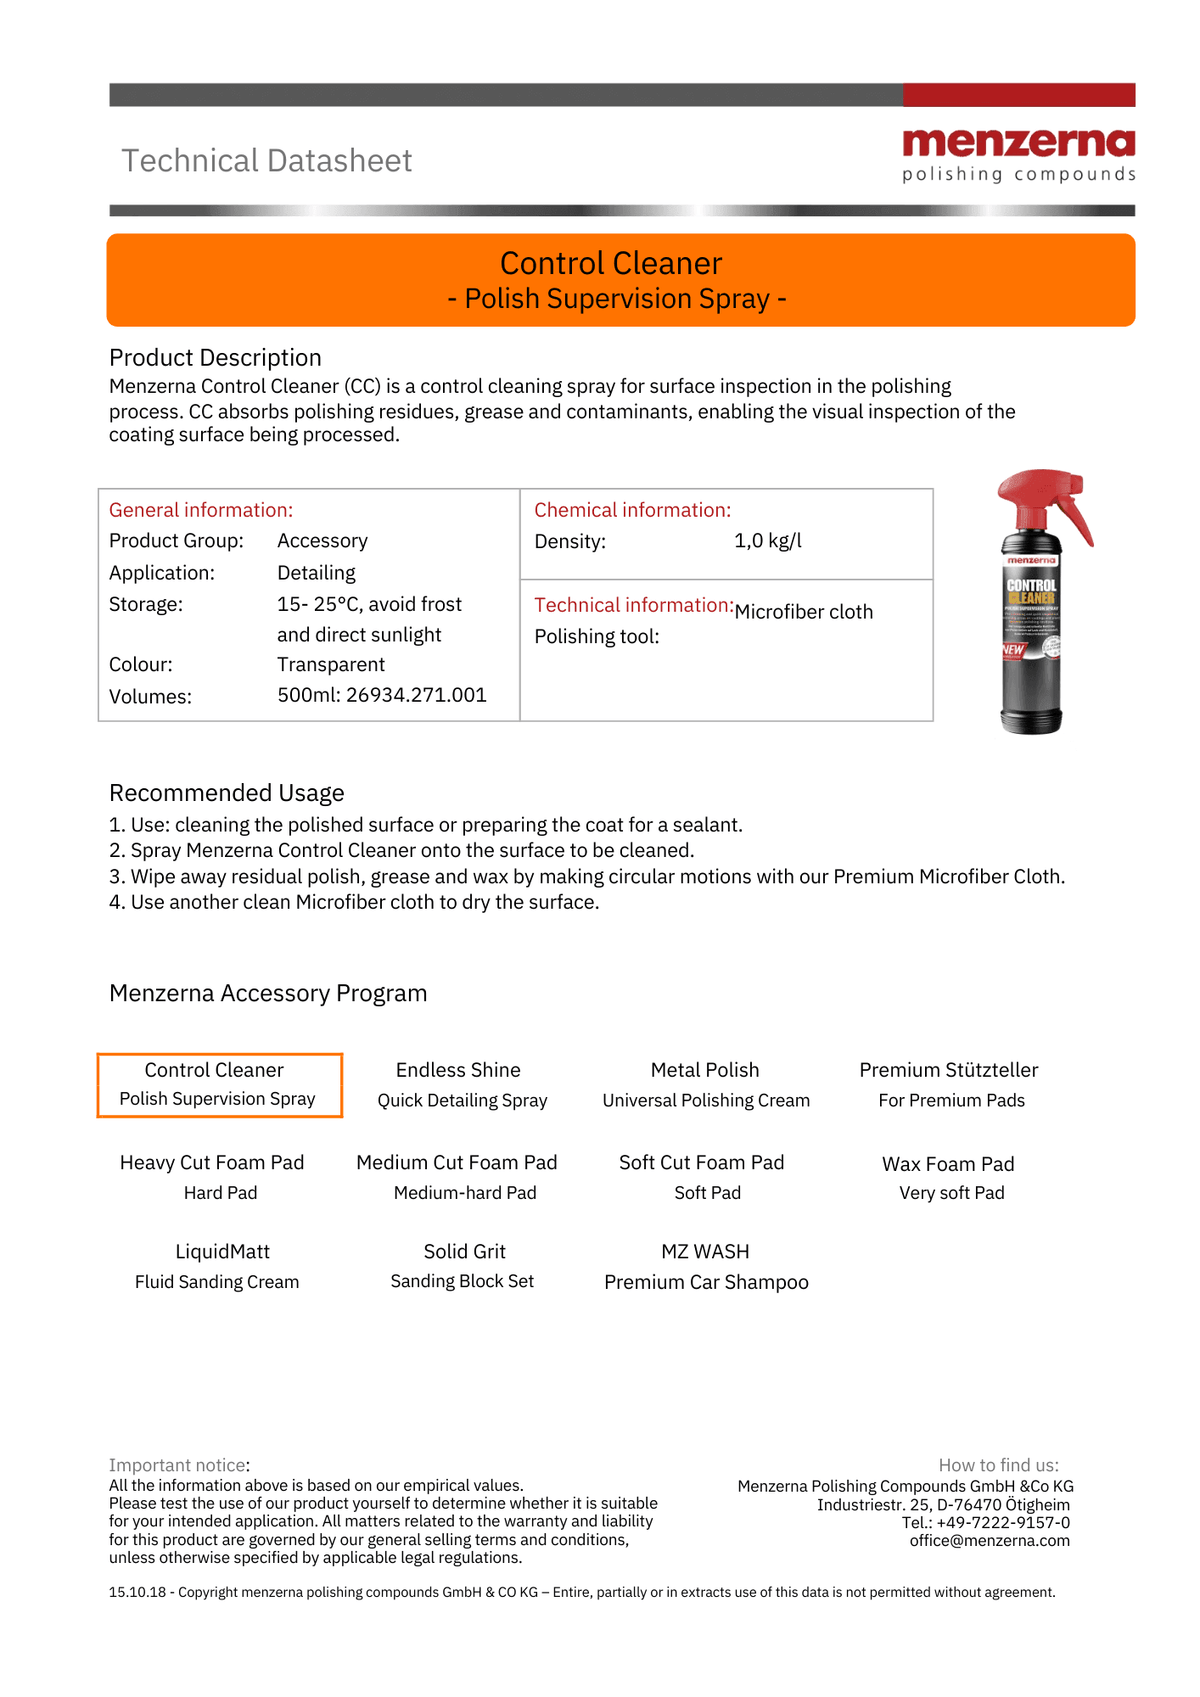 Menzerna Control Cleaner Spray 16oz  - Car Polish/Wax & Sealant - Maazzo